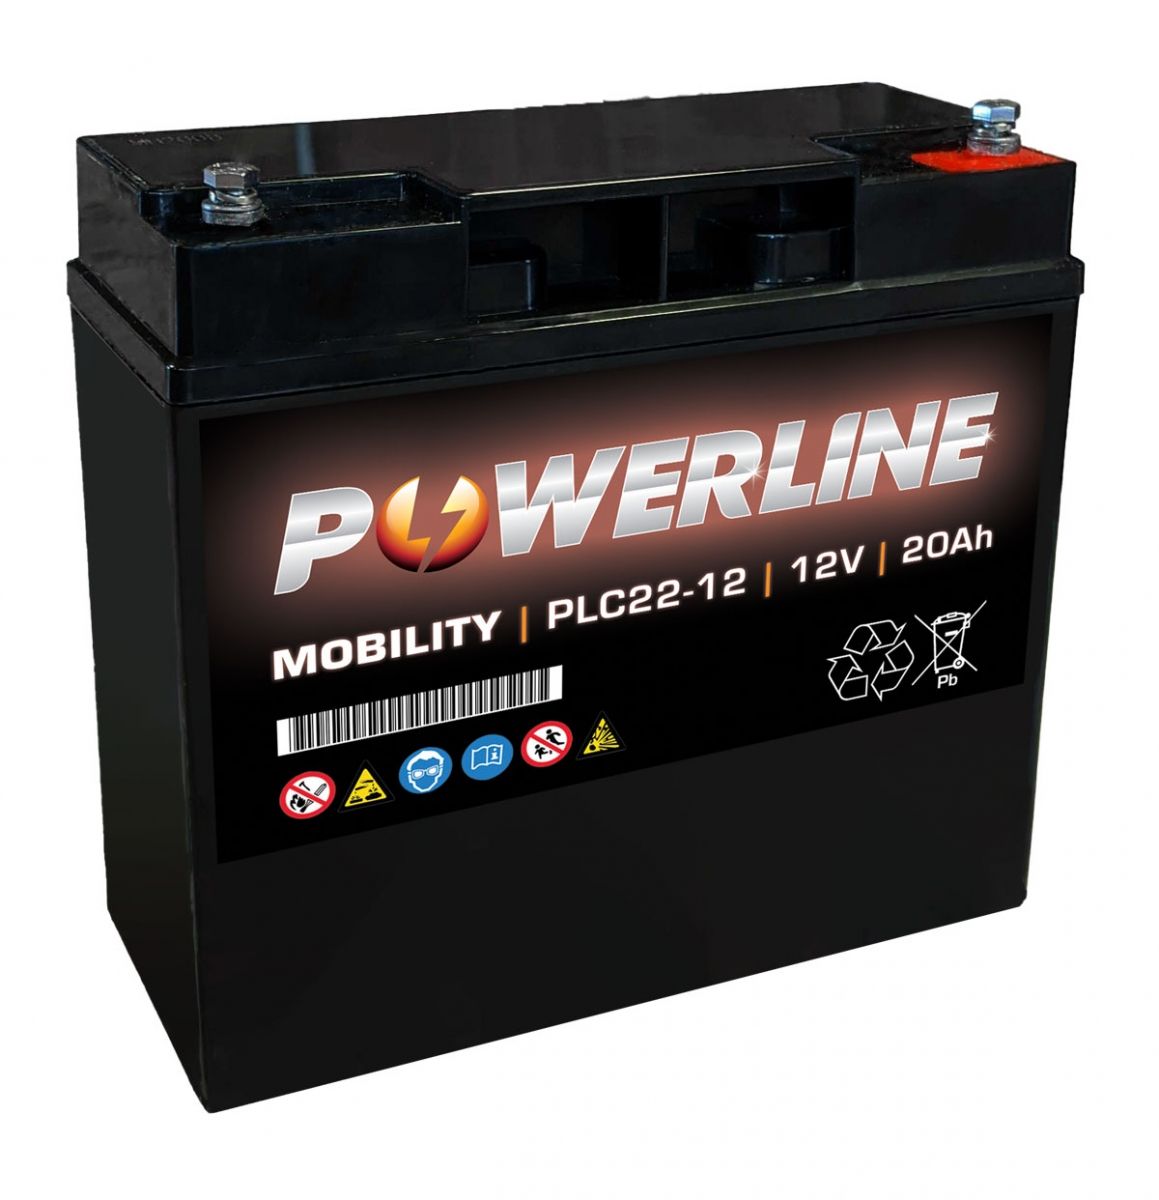 PLC22-12 Powerline Mobility Battery 12 V 20 Ah 